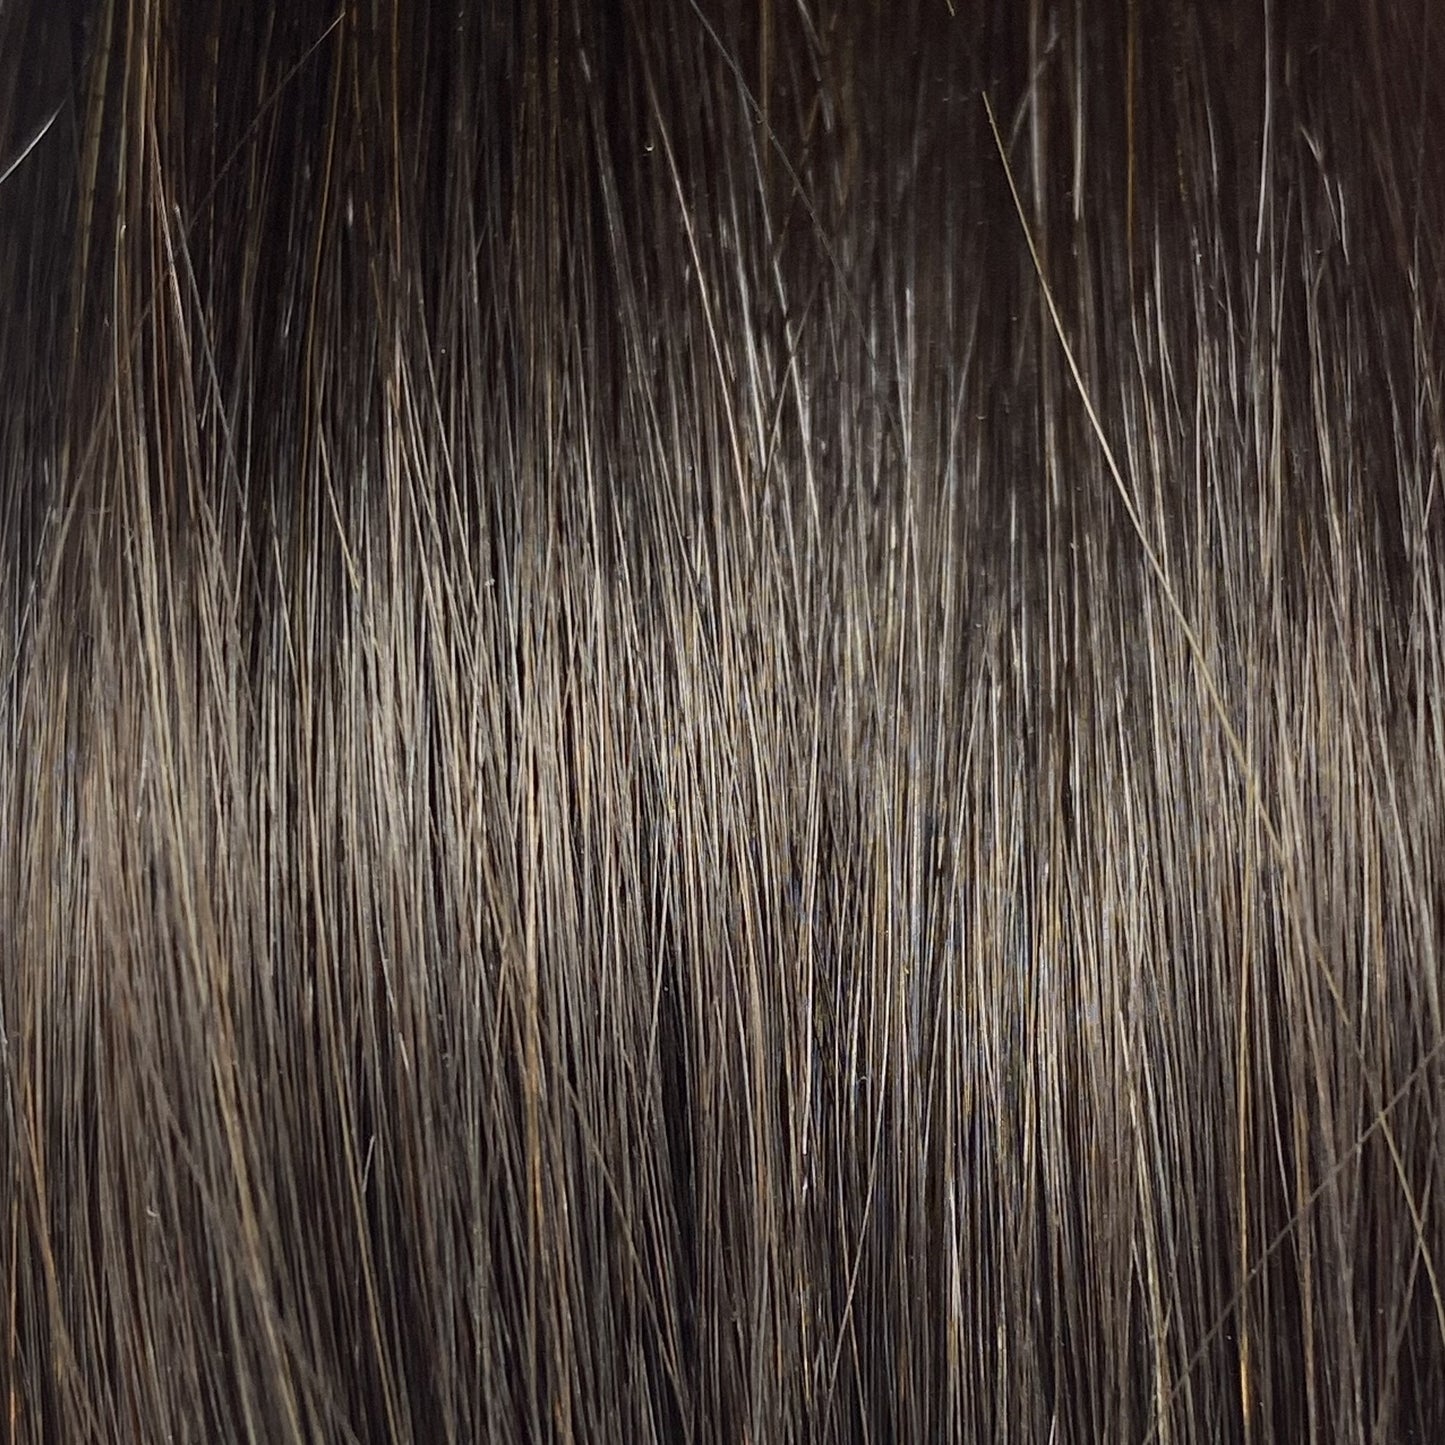 Fusion hair extensions #2 - 40cm/16 inches - Dark Chestnut Fusion Euro So Cap 